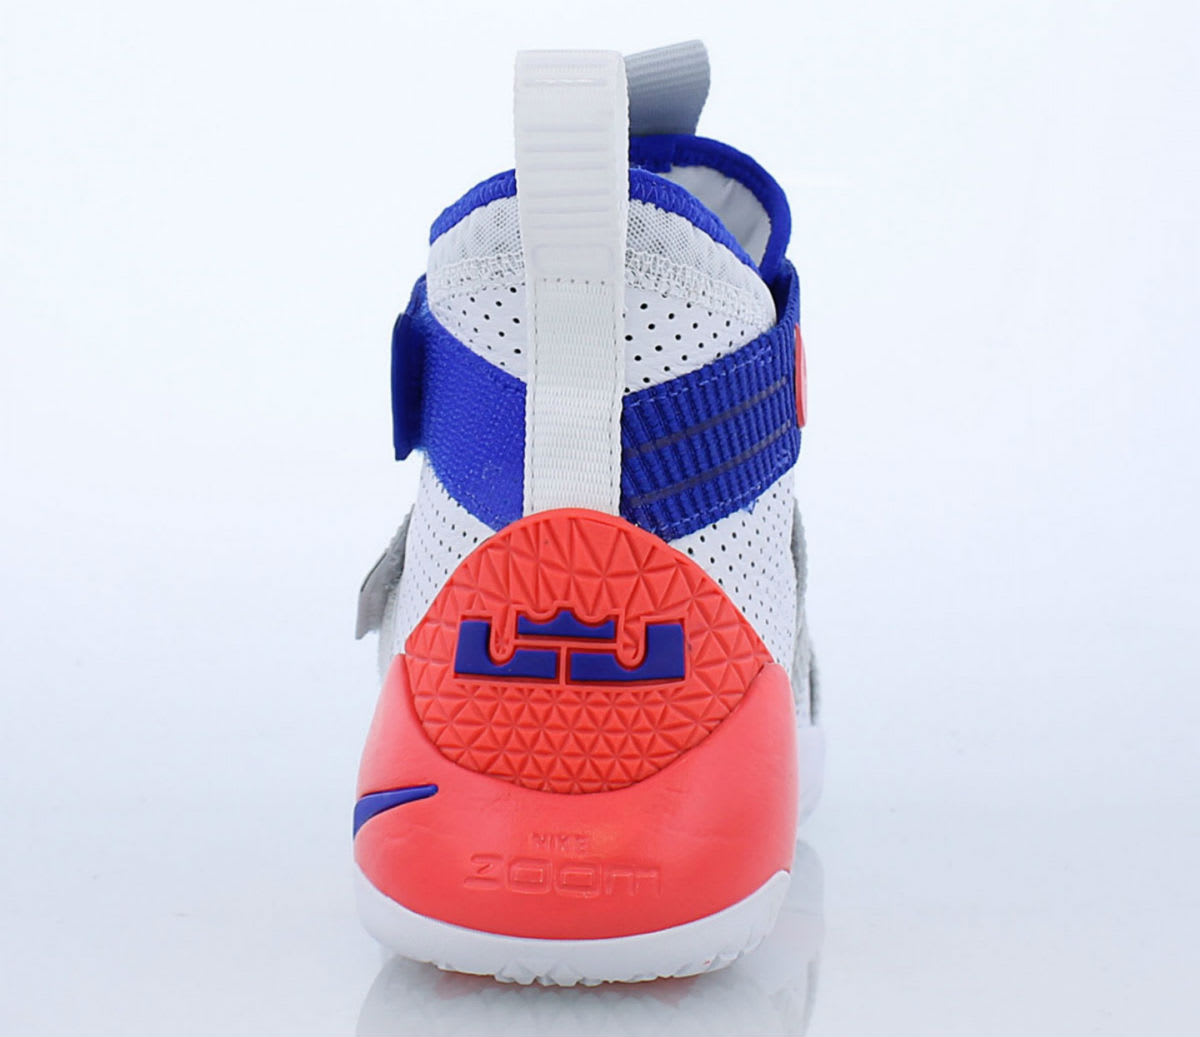 Nike LeBron Soldier 11 Ultramarine Release Date 897646-101 Heel